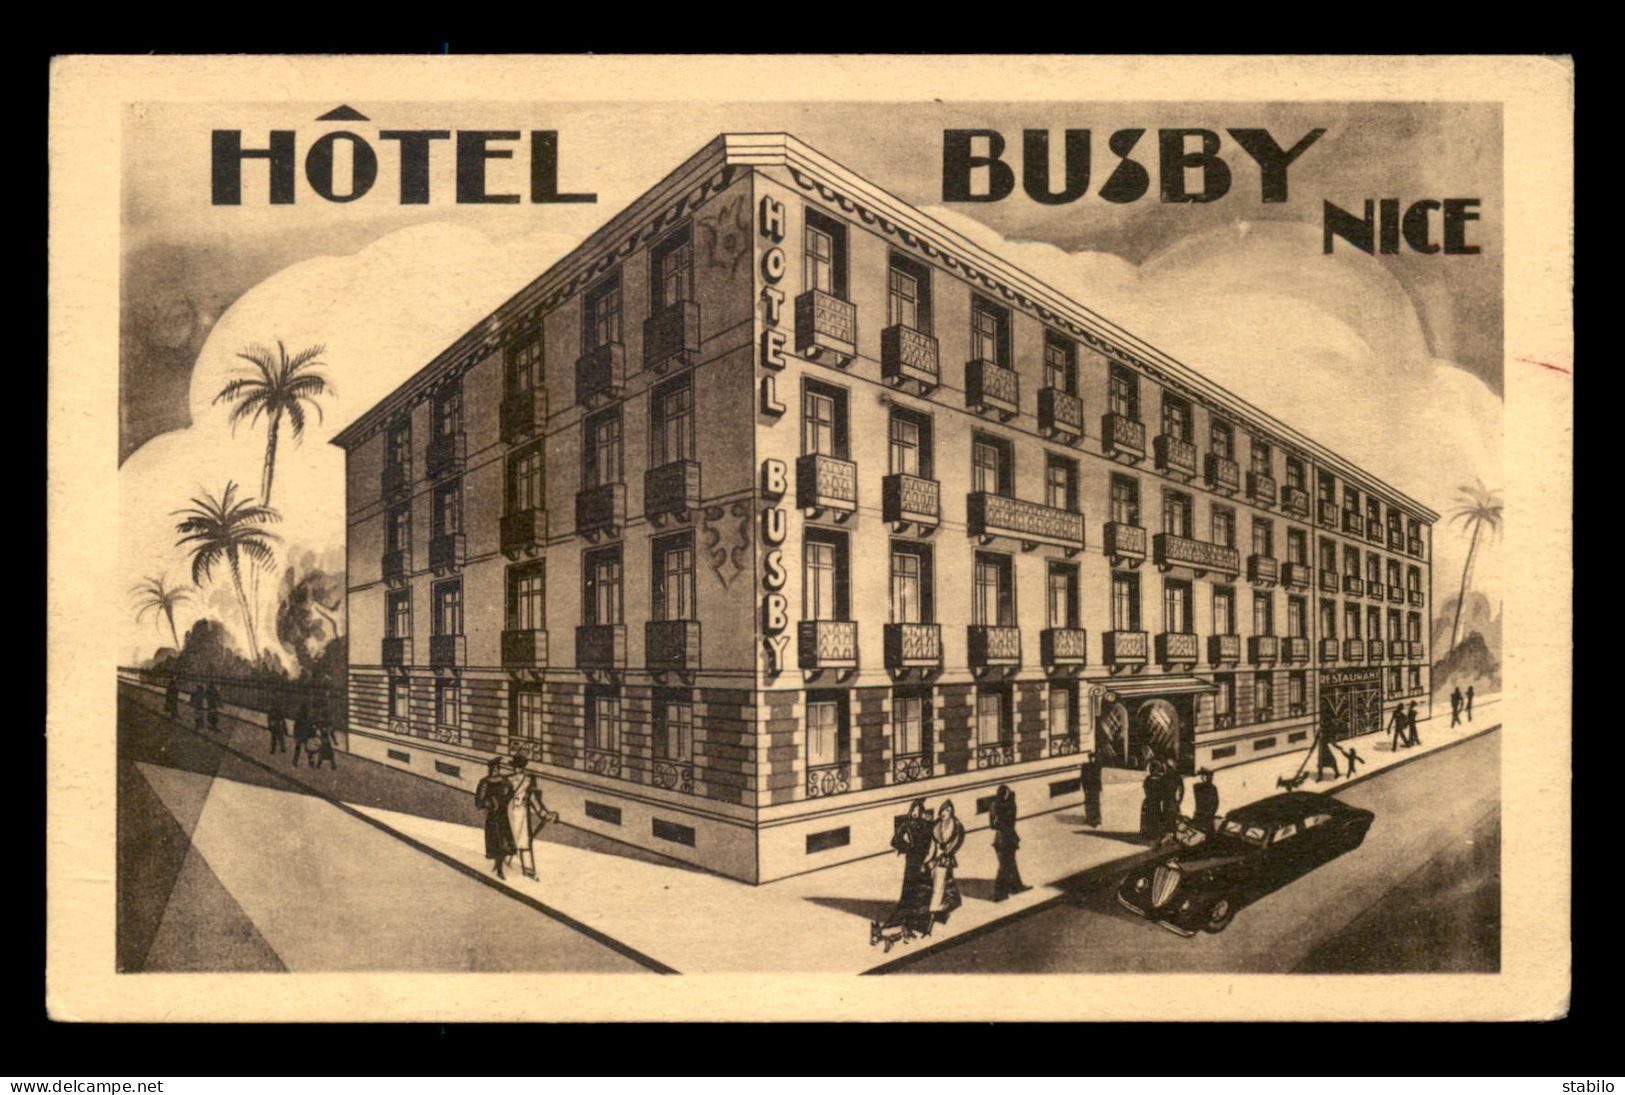 06 - NICE - HOTEL BUSBY, 36-38 RUE DU MARECHAL JOFFRE - CARTE ILLUSTREE - Pubs, Hotels And Restaurants